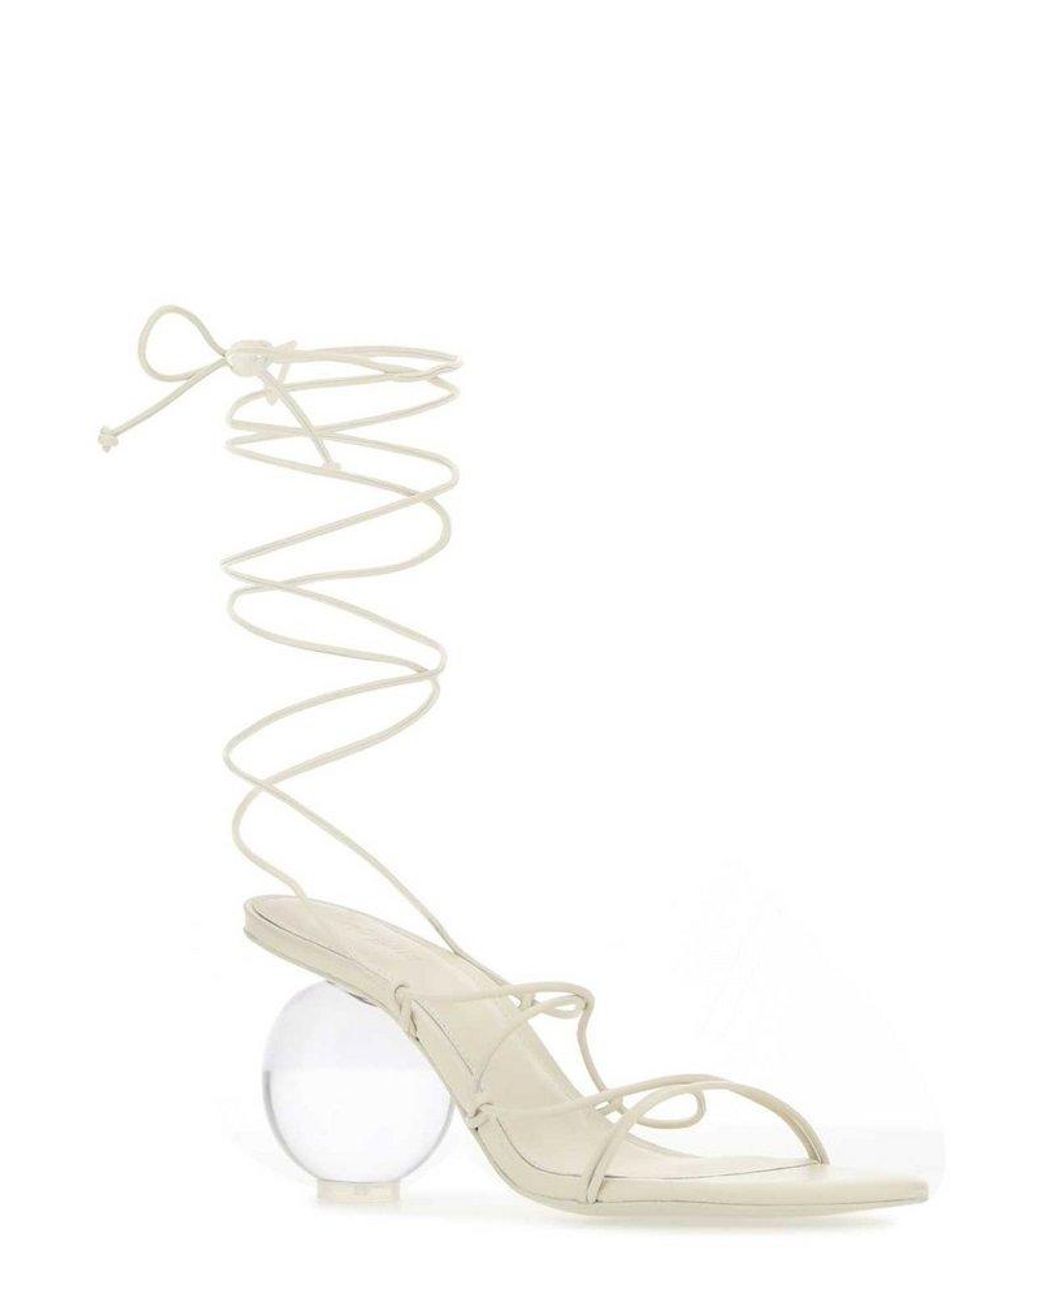 Cult Gaia Su Ankle-tie Open Toe Sandals in White | Lyst